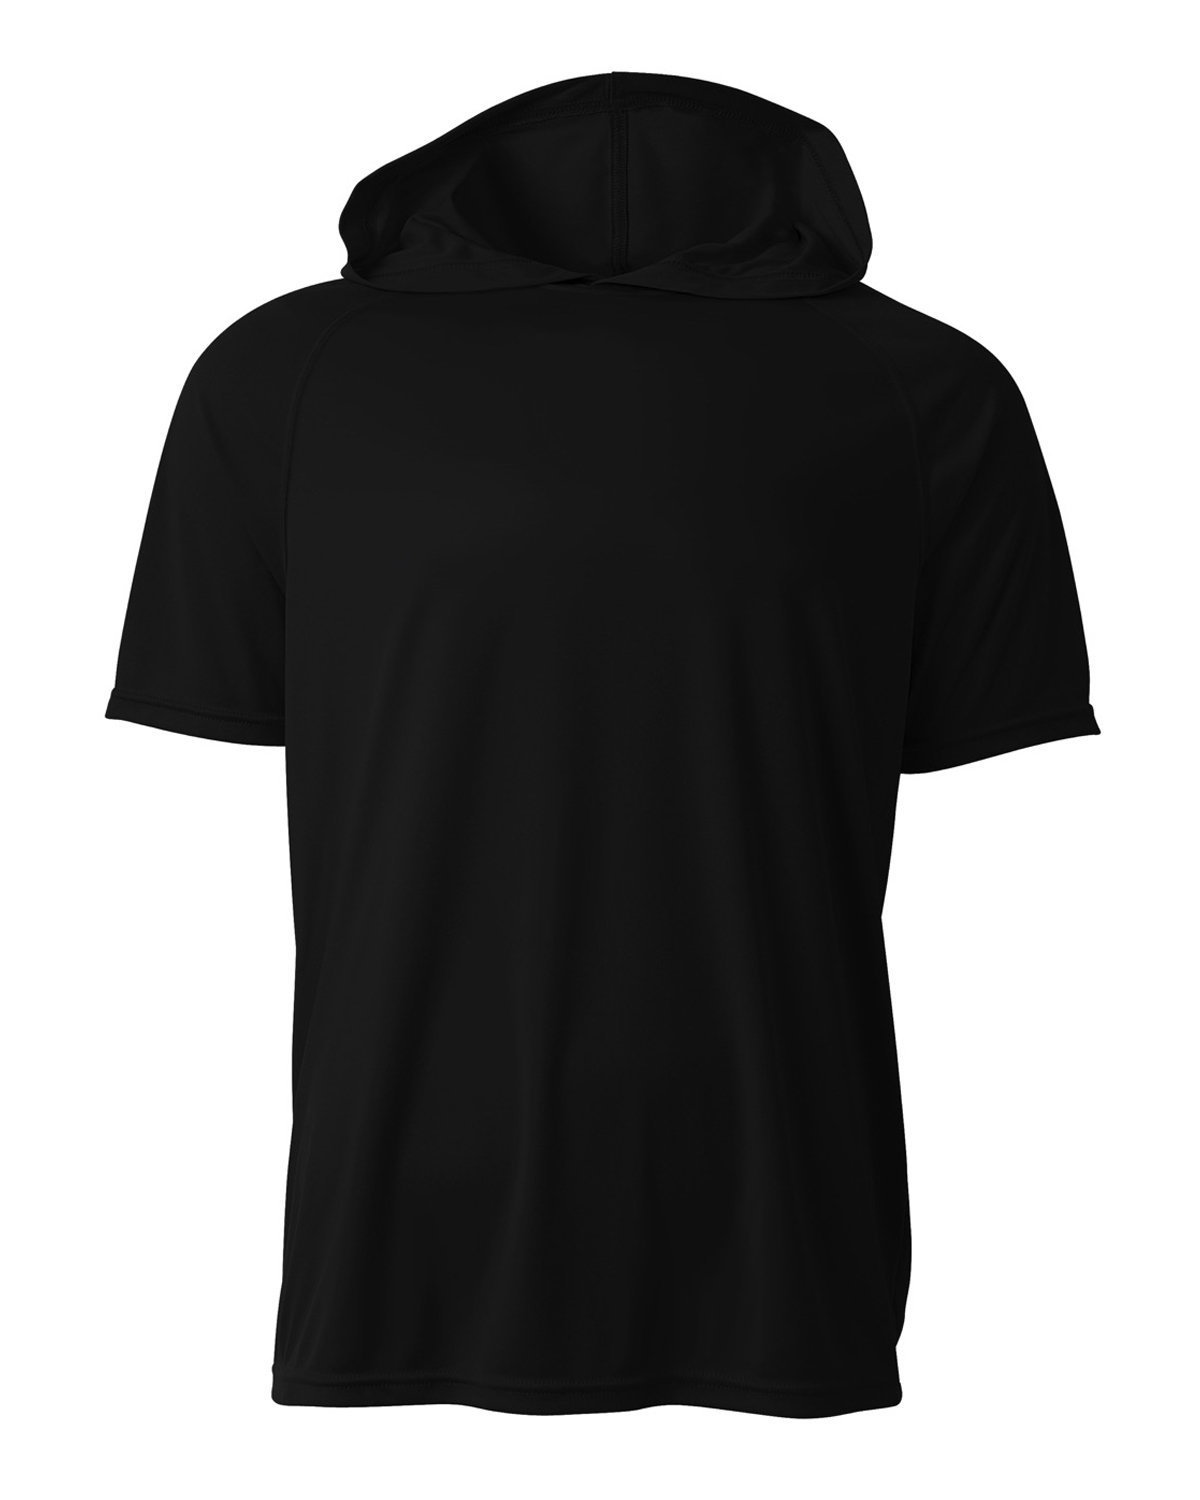 Black Hooded T-Shirt